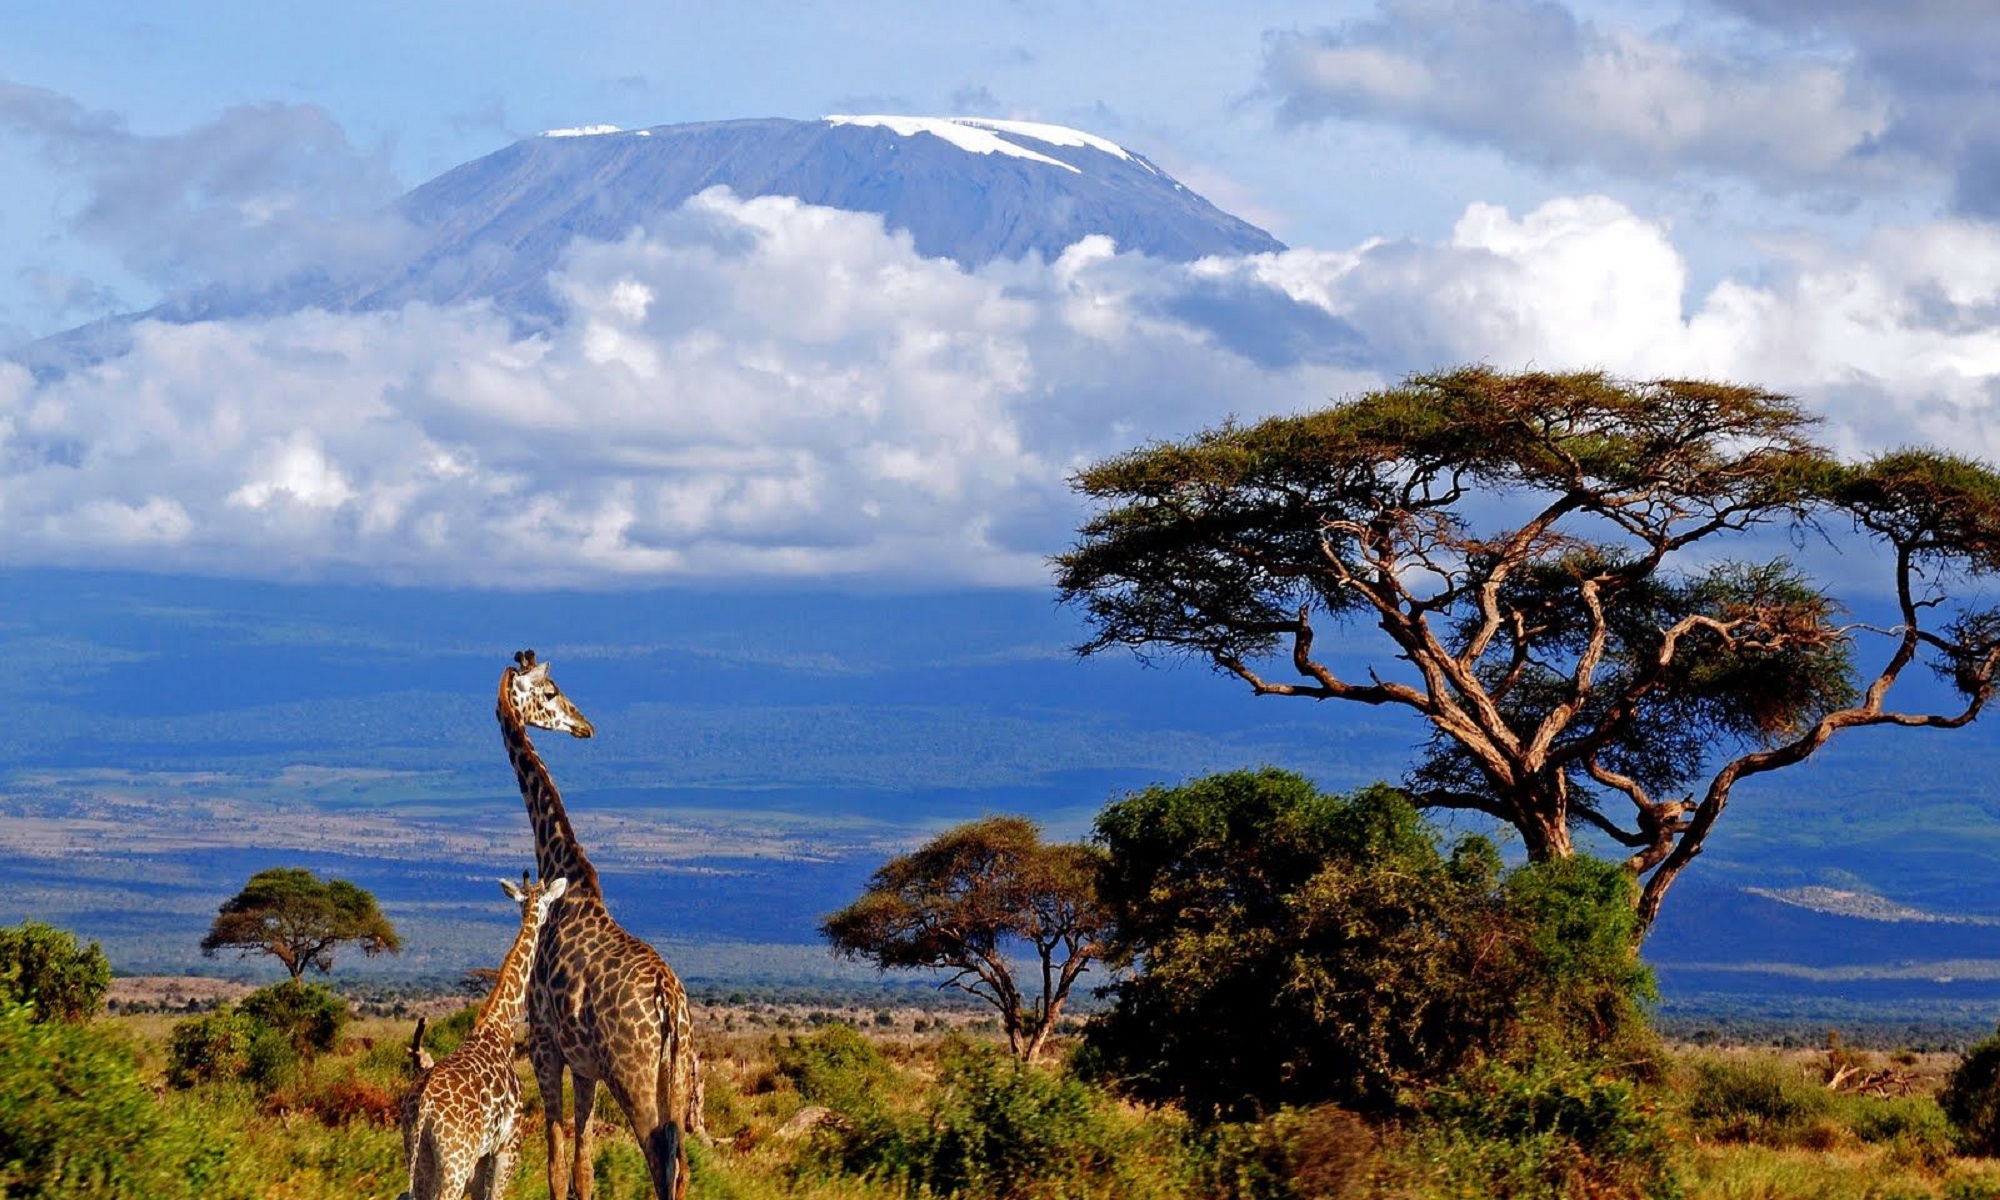 Animals in Kilimanjaro National Park.